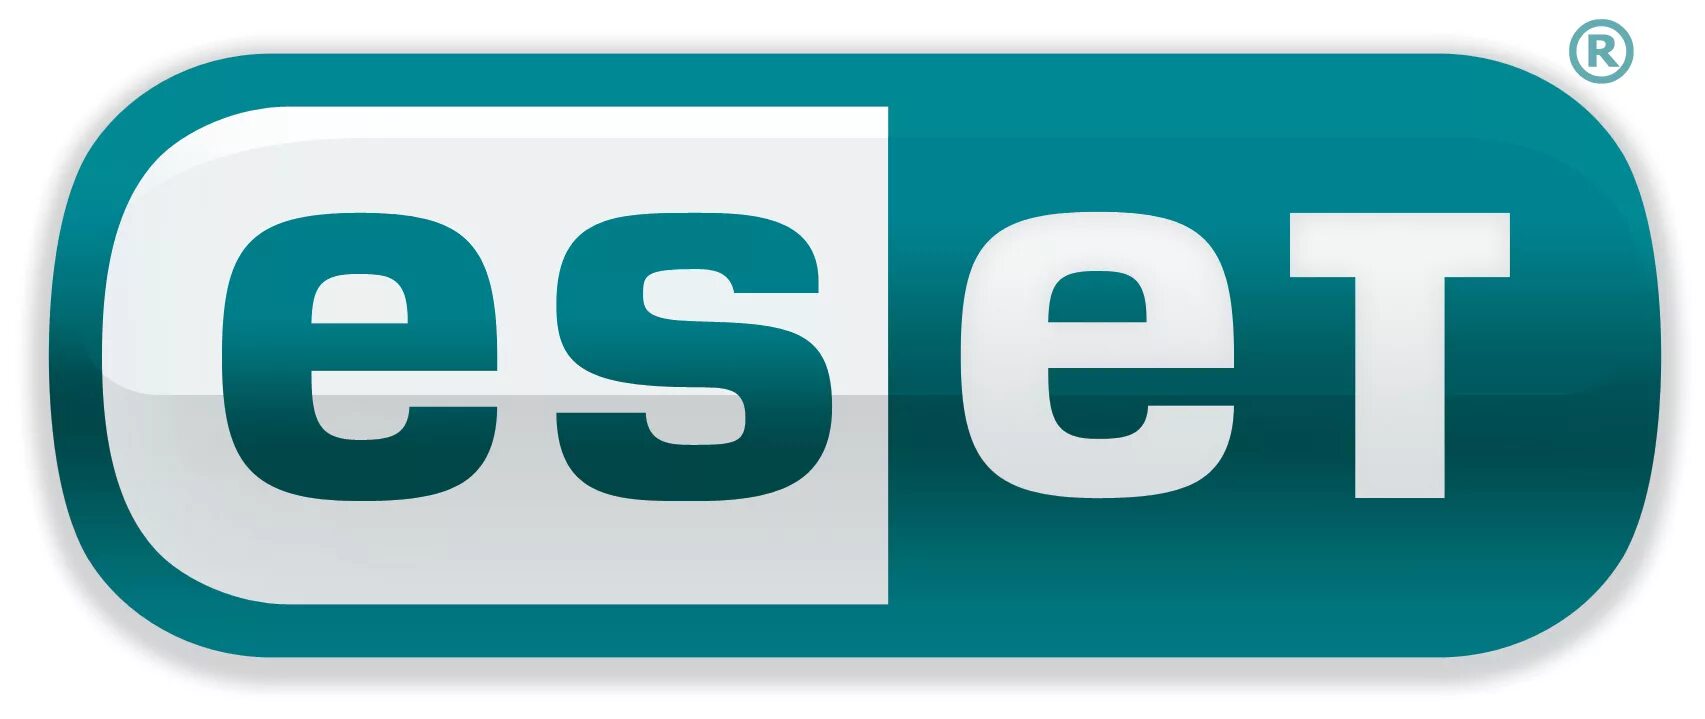 ESET nod32 логотип. ESET nod32 logo PNG. ESET nod32 антивирус логотип. Логотипы ESET 32. Нот антивирус